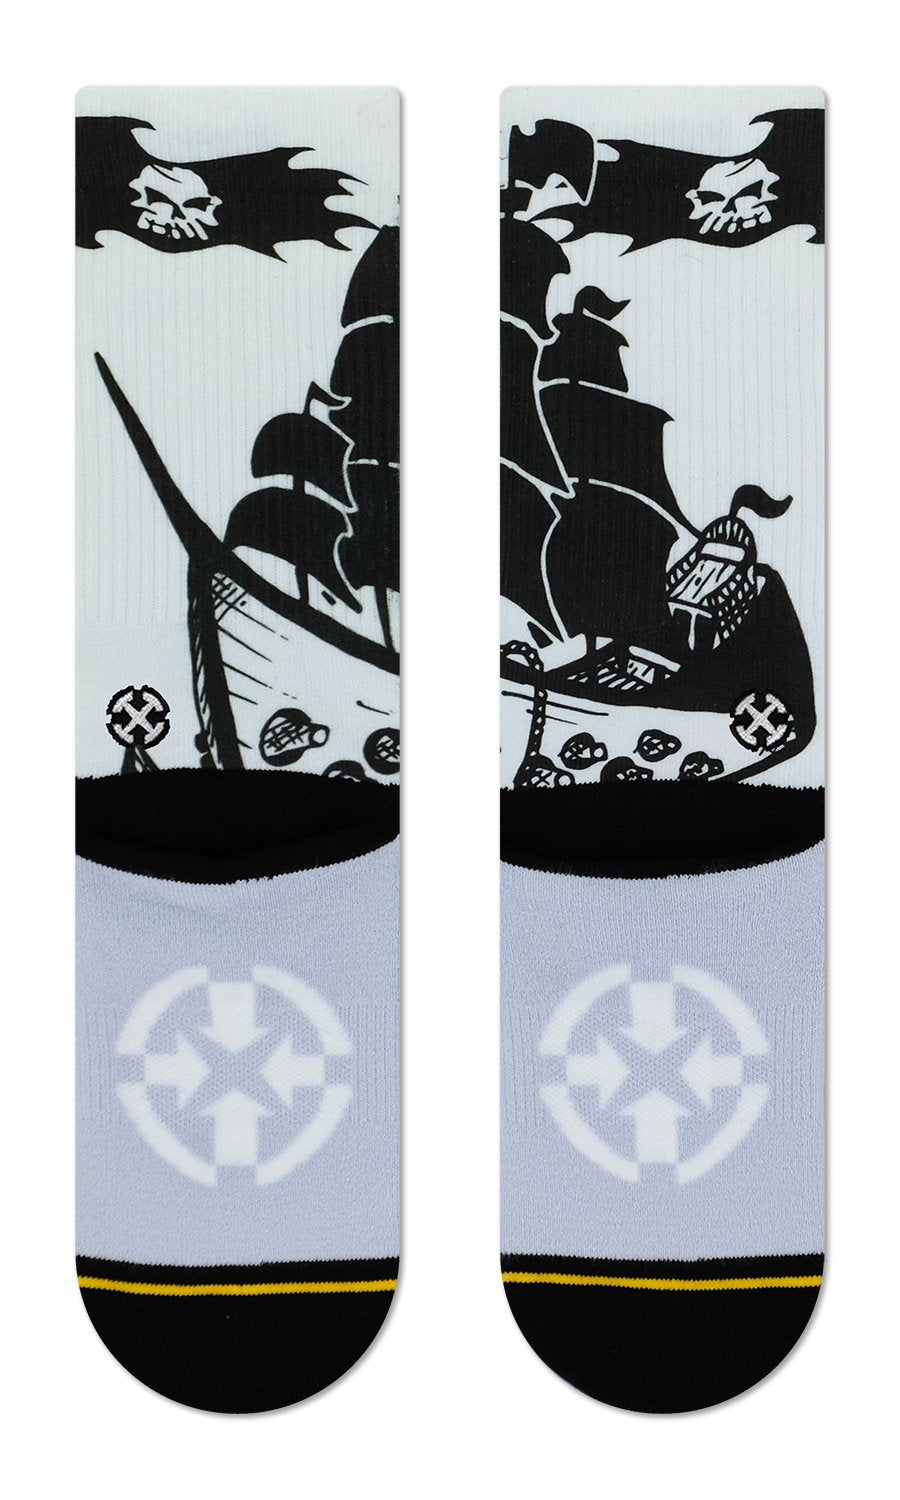 Josh Rodriguez Black Sails Socks - Large